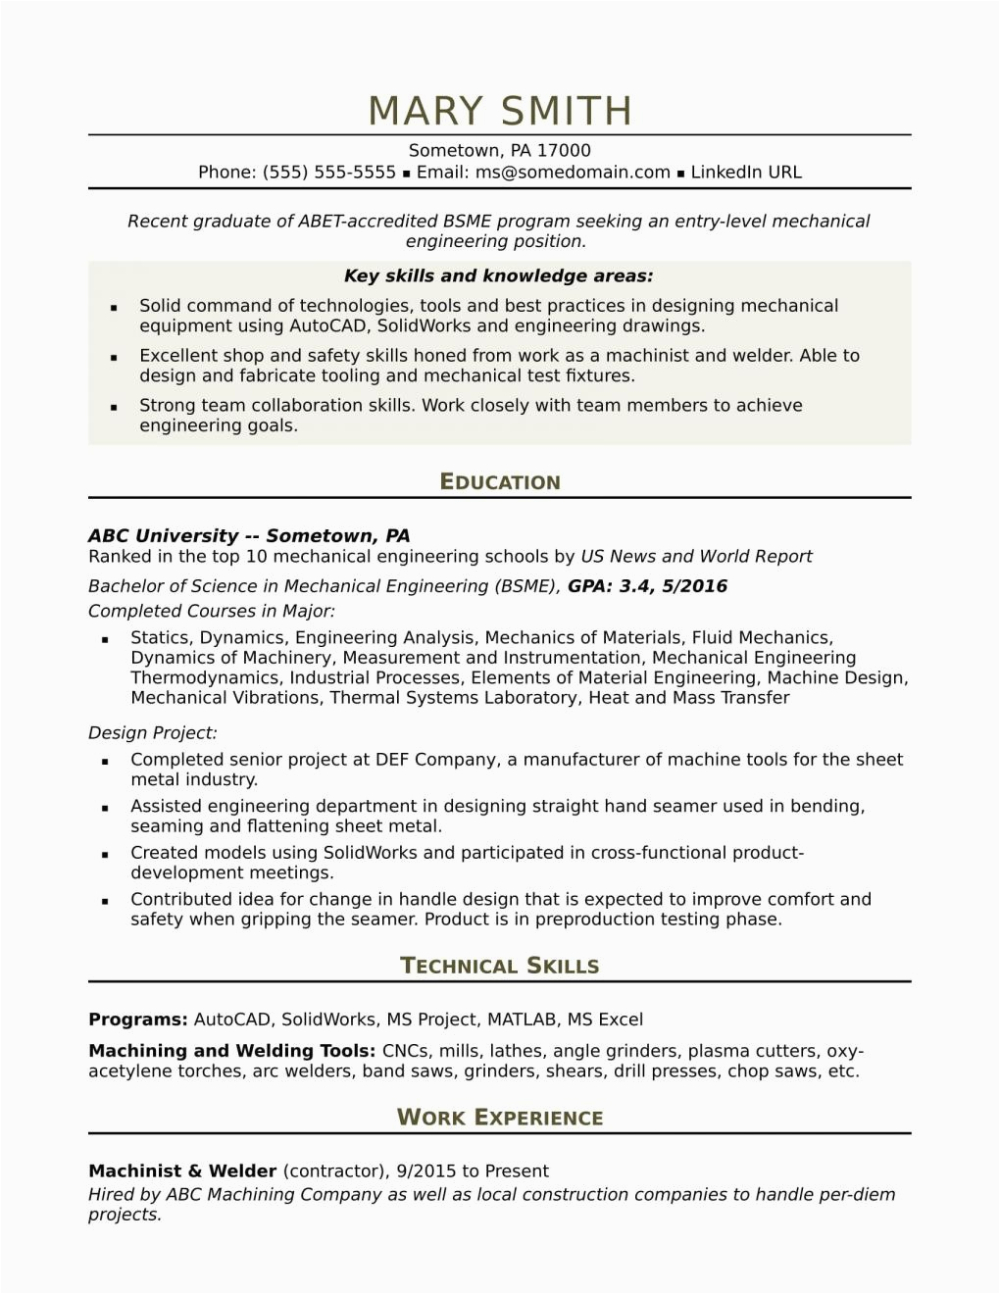 Sample Resume format for Mechanical Design Engineer Sample Resume for An Entry Level Mechanical Engineer